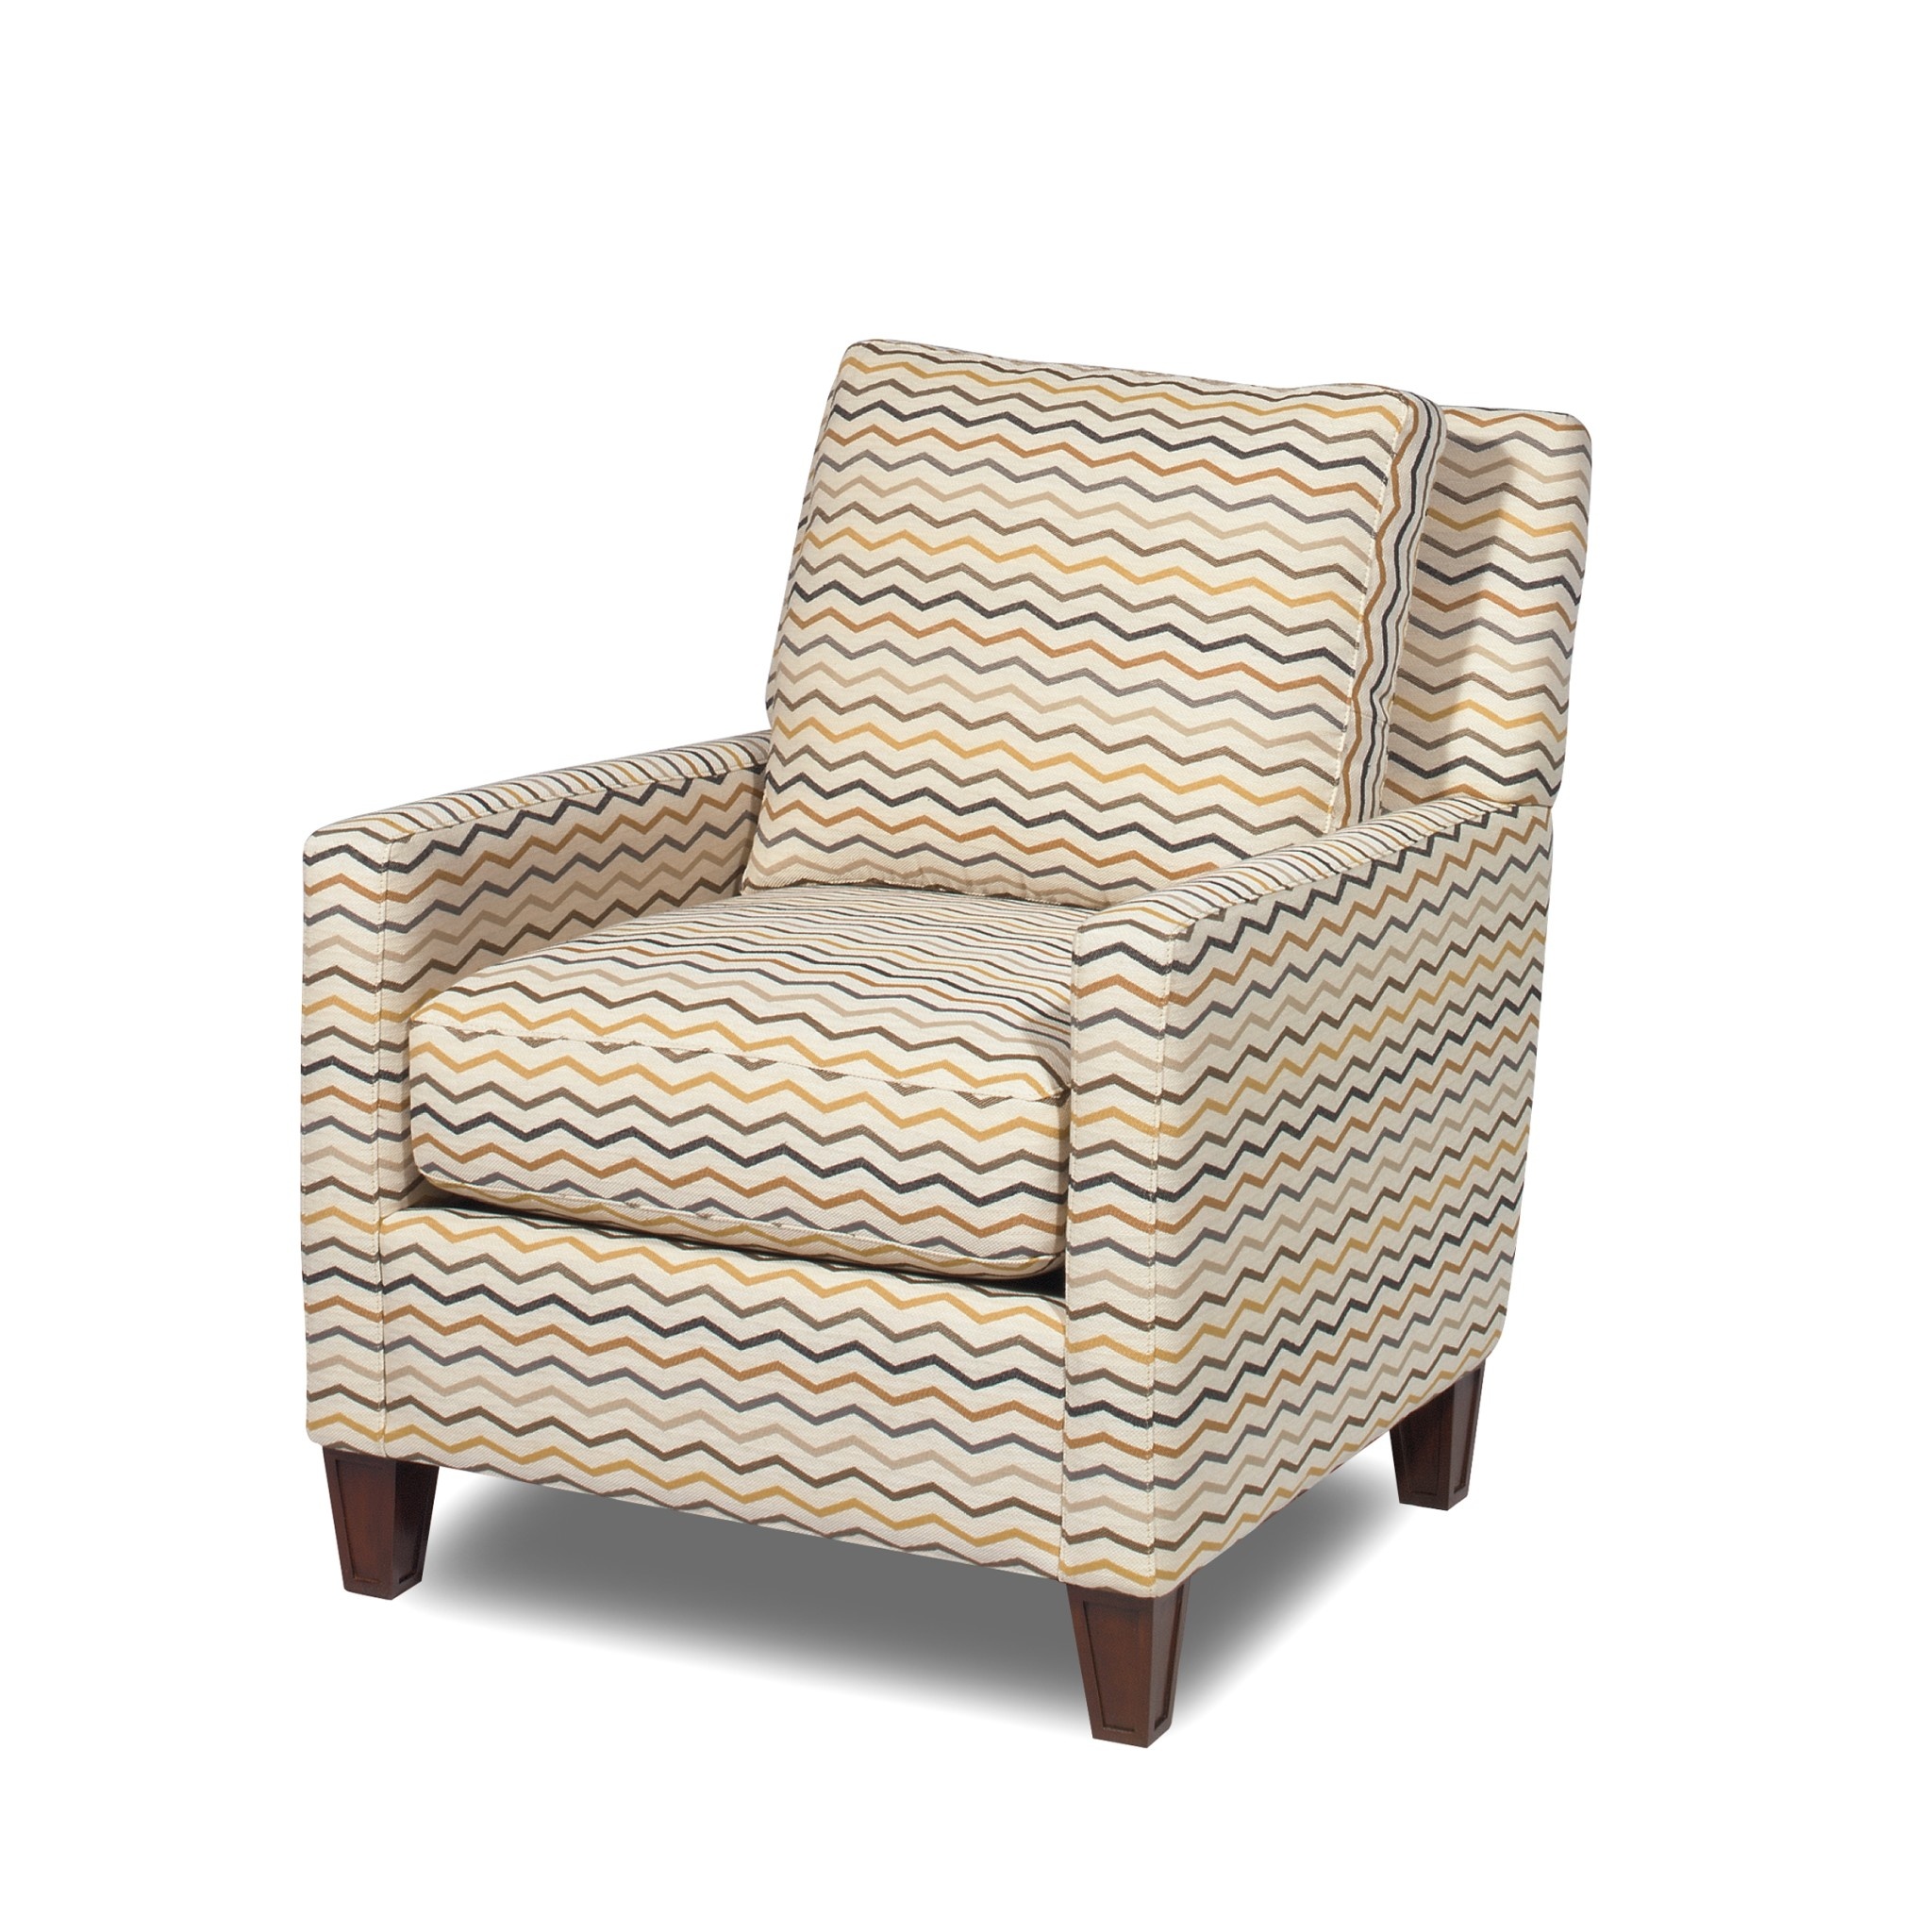 Craftmaster Furniture 012110 Chair